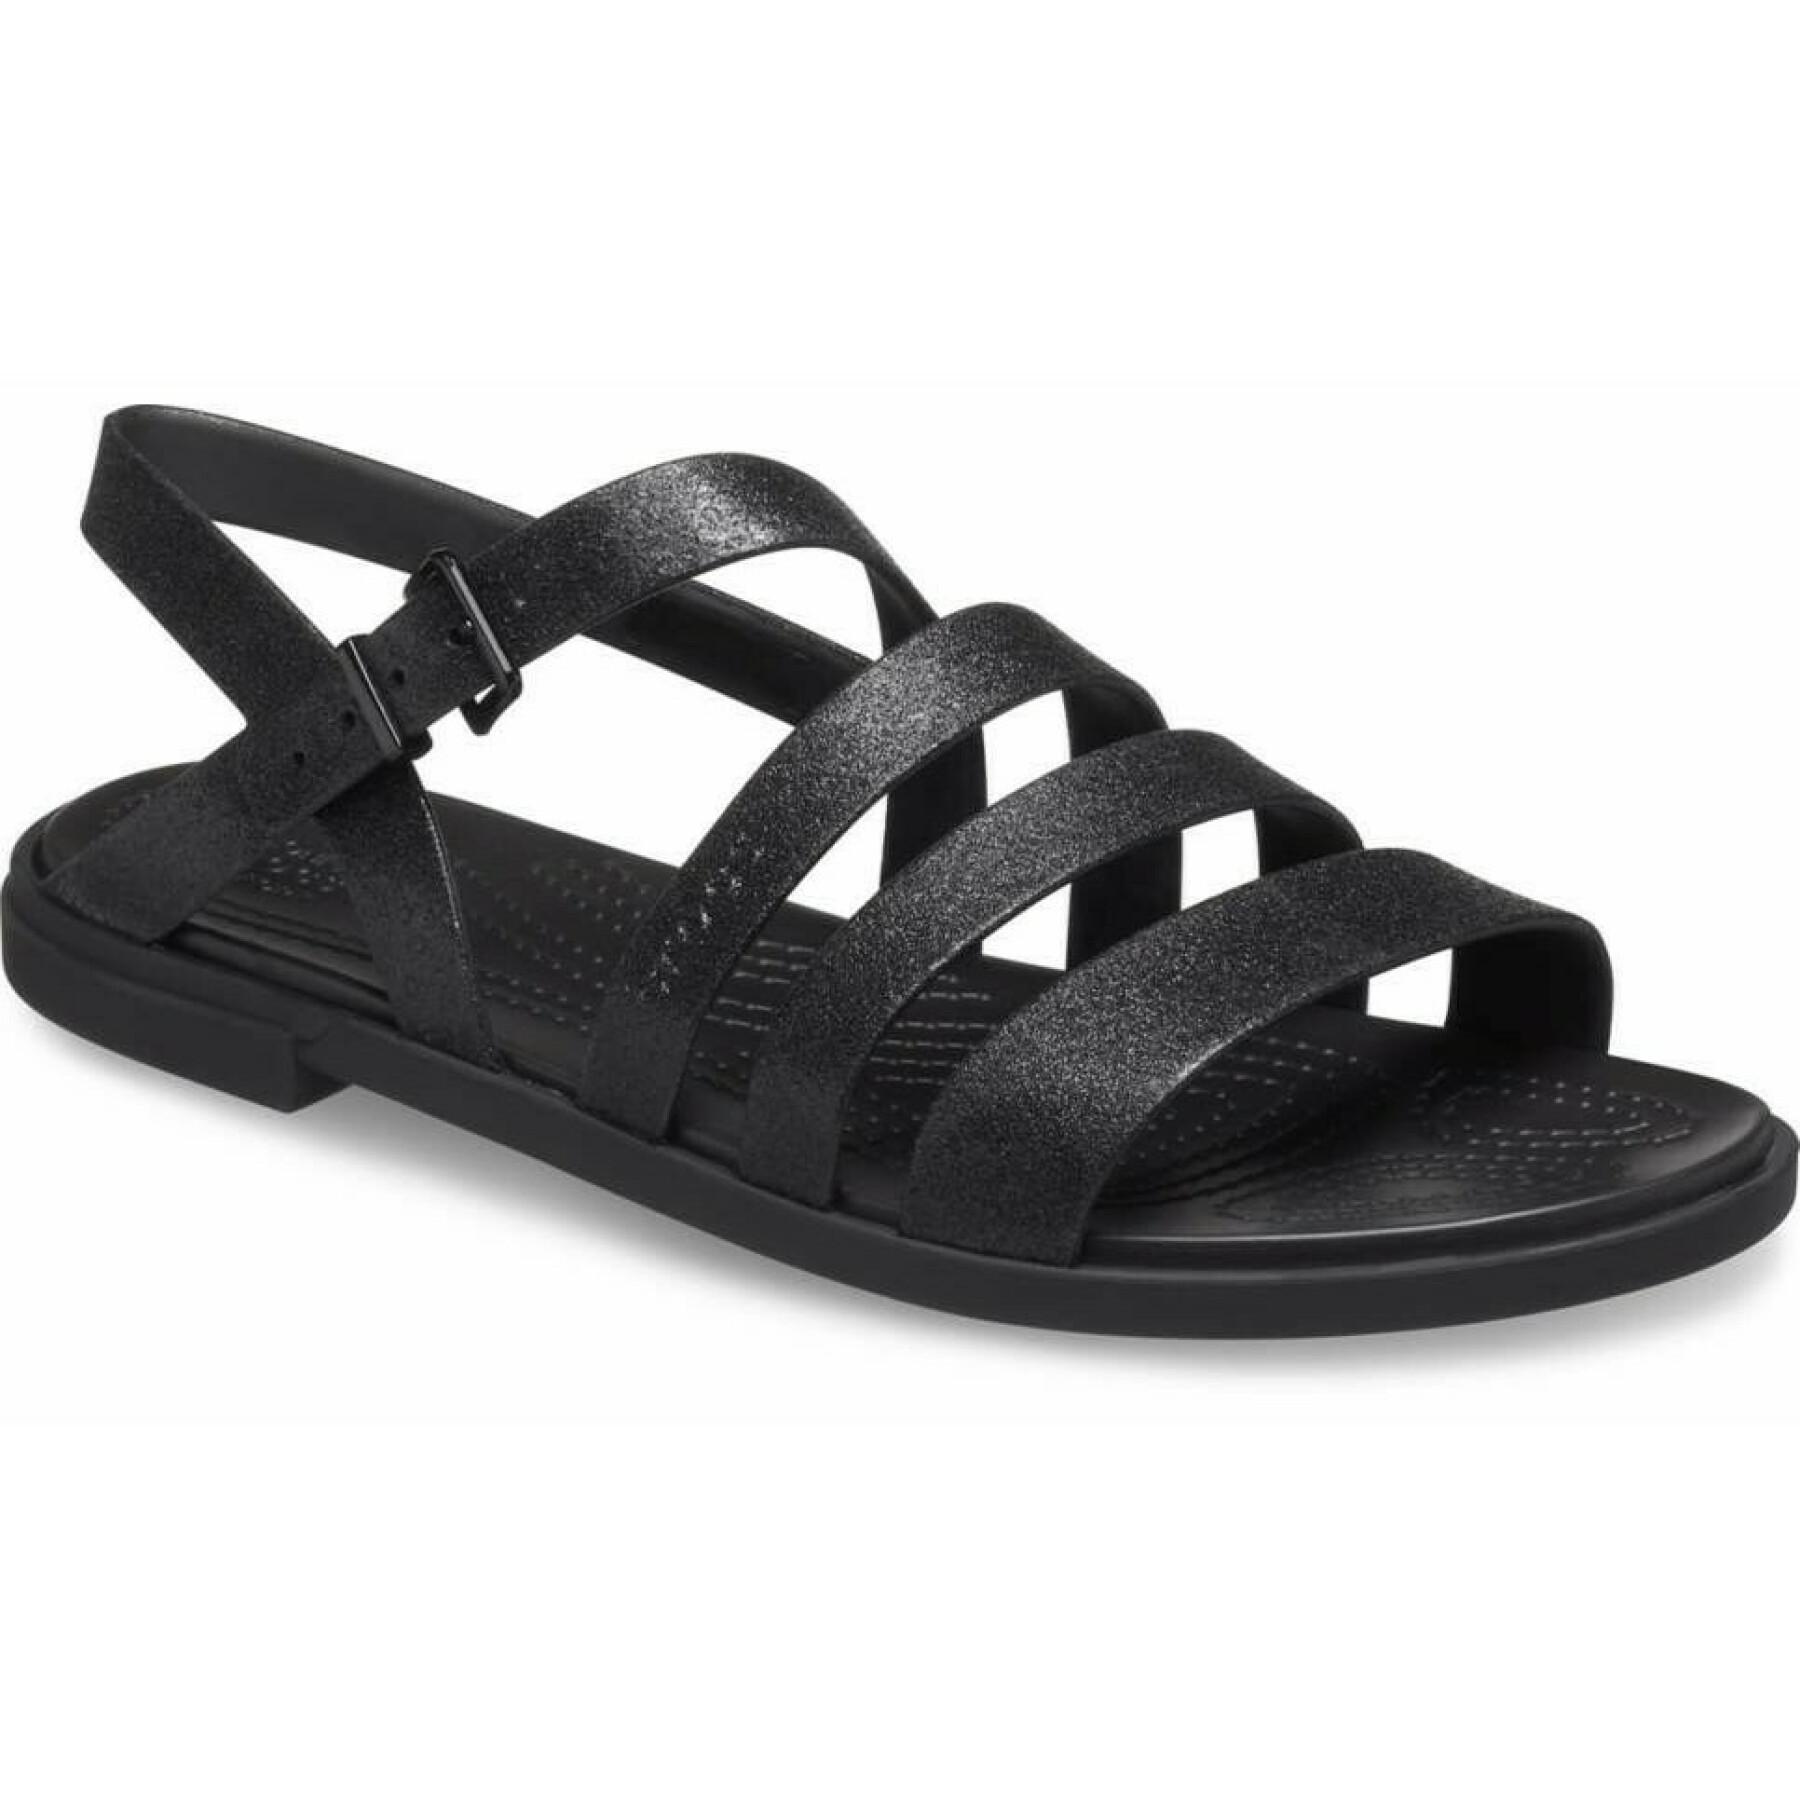 Women's sandals Crocs Tulum Glitter